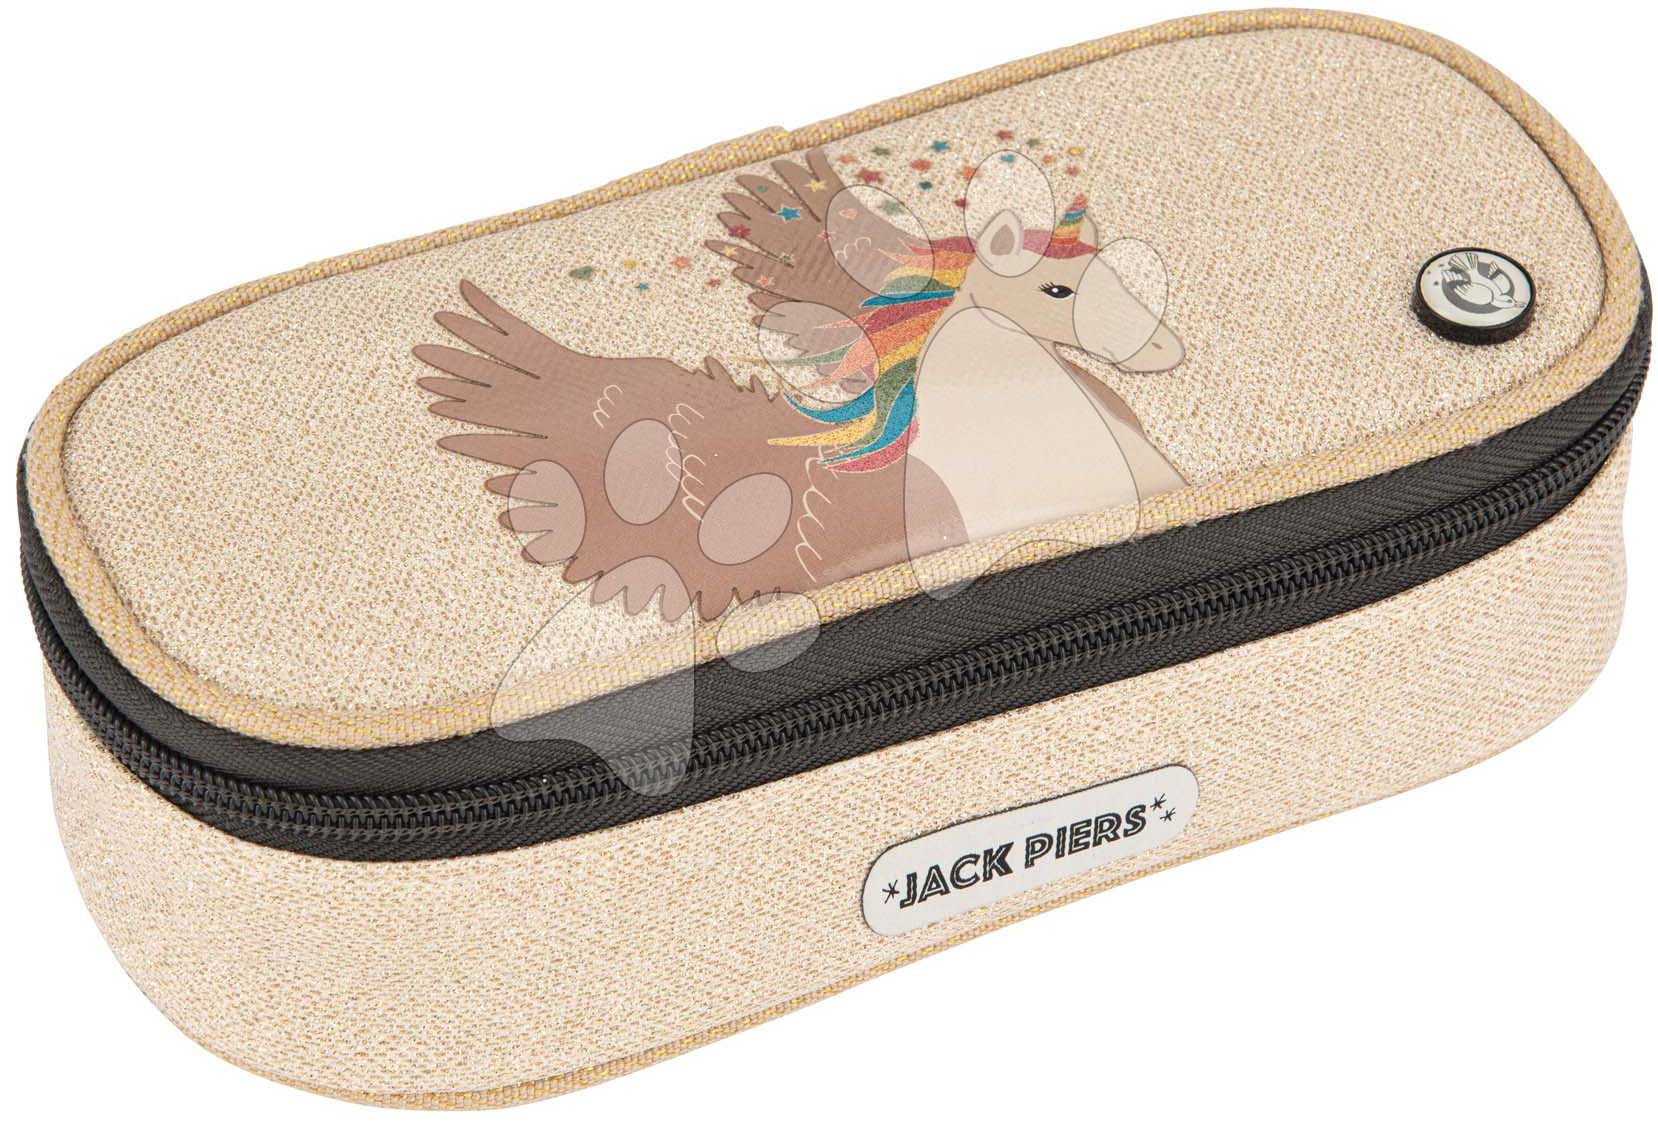 Tolltartó Pencil Case Unicorn Jack Piers ergonomikus luxus kivitel 2 évtől 20*6*9 cm